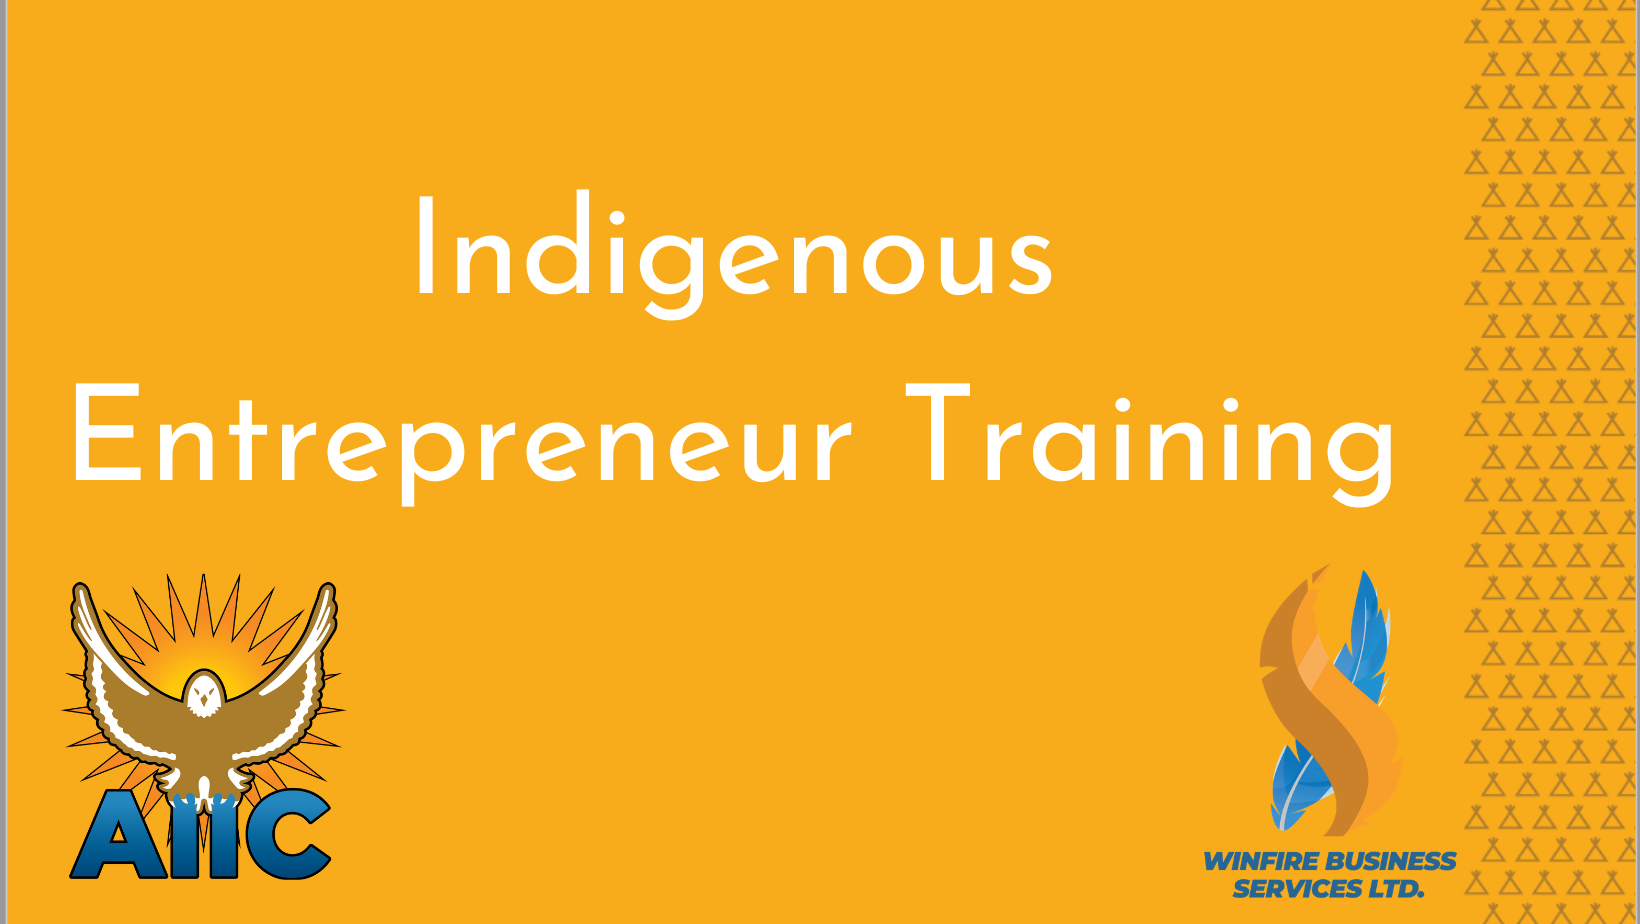 Indigenous Entrepreneur Training